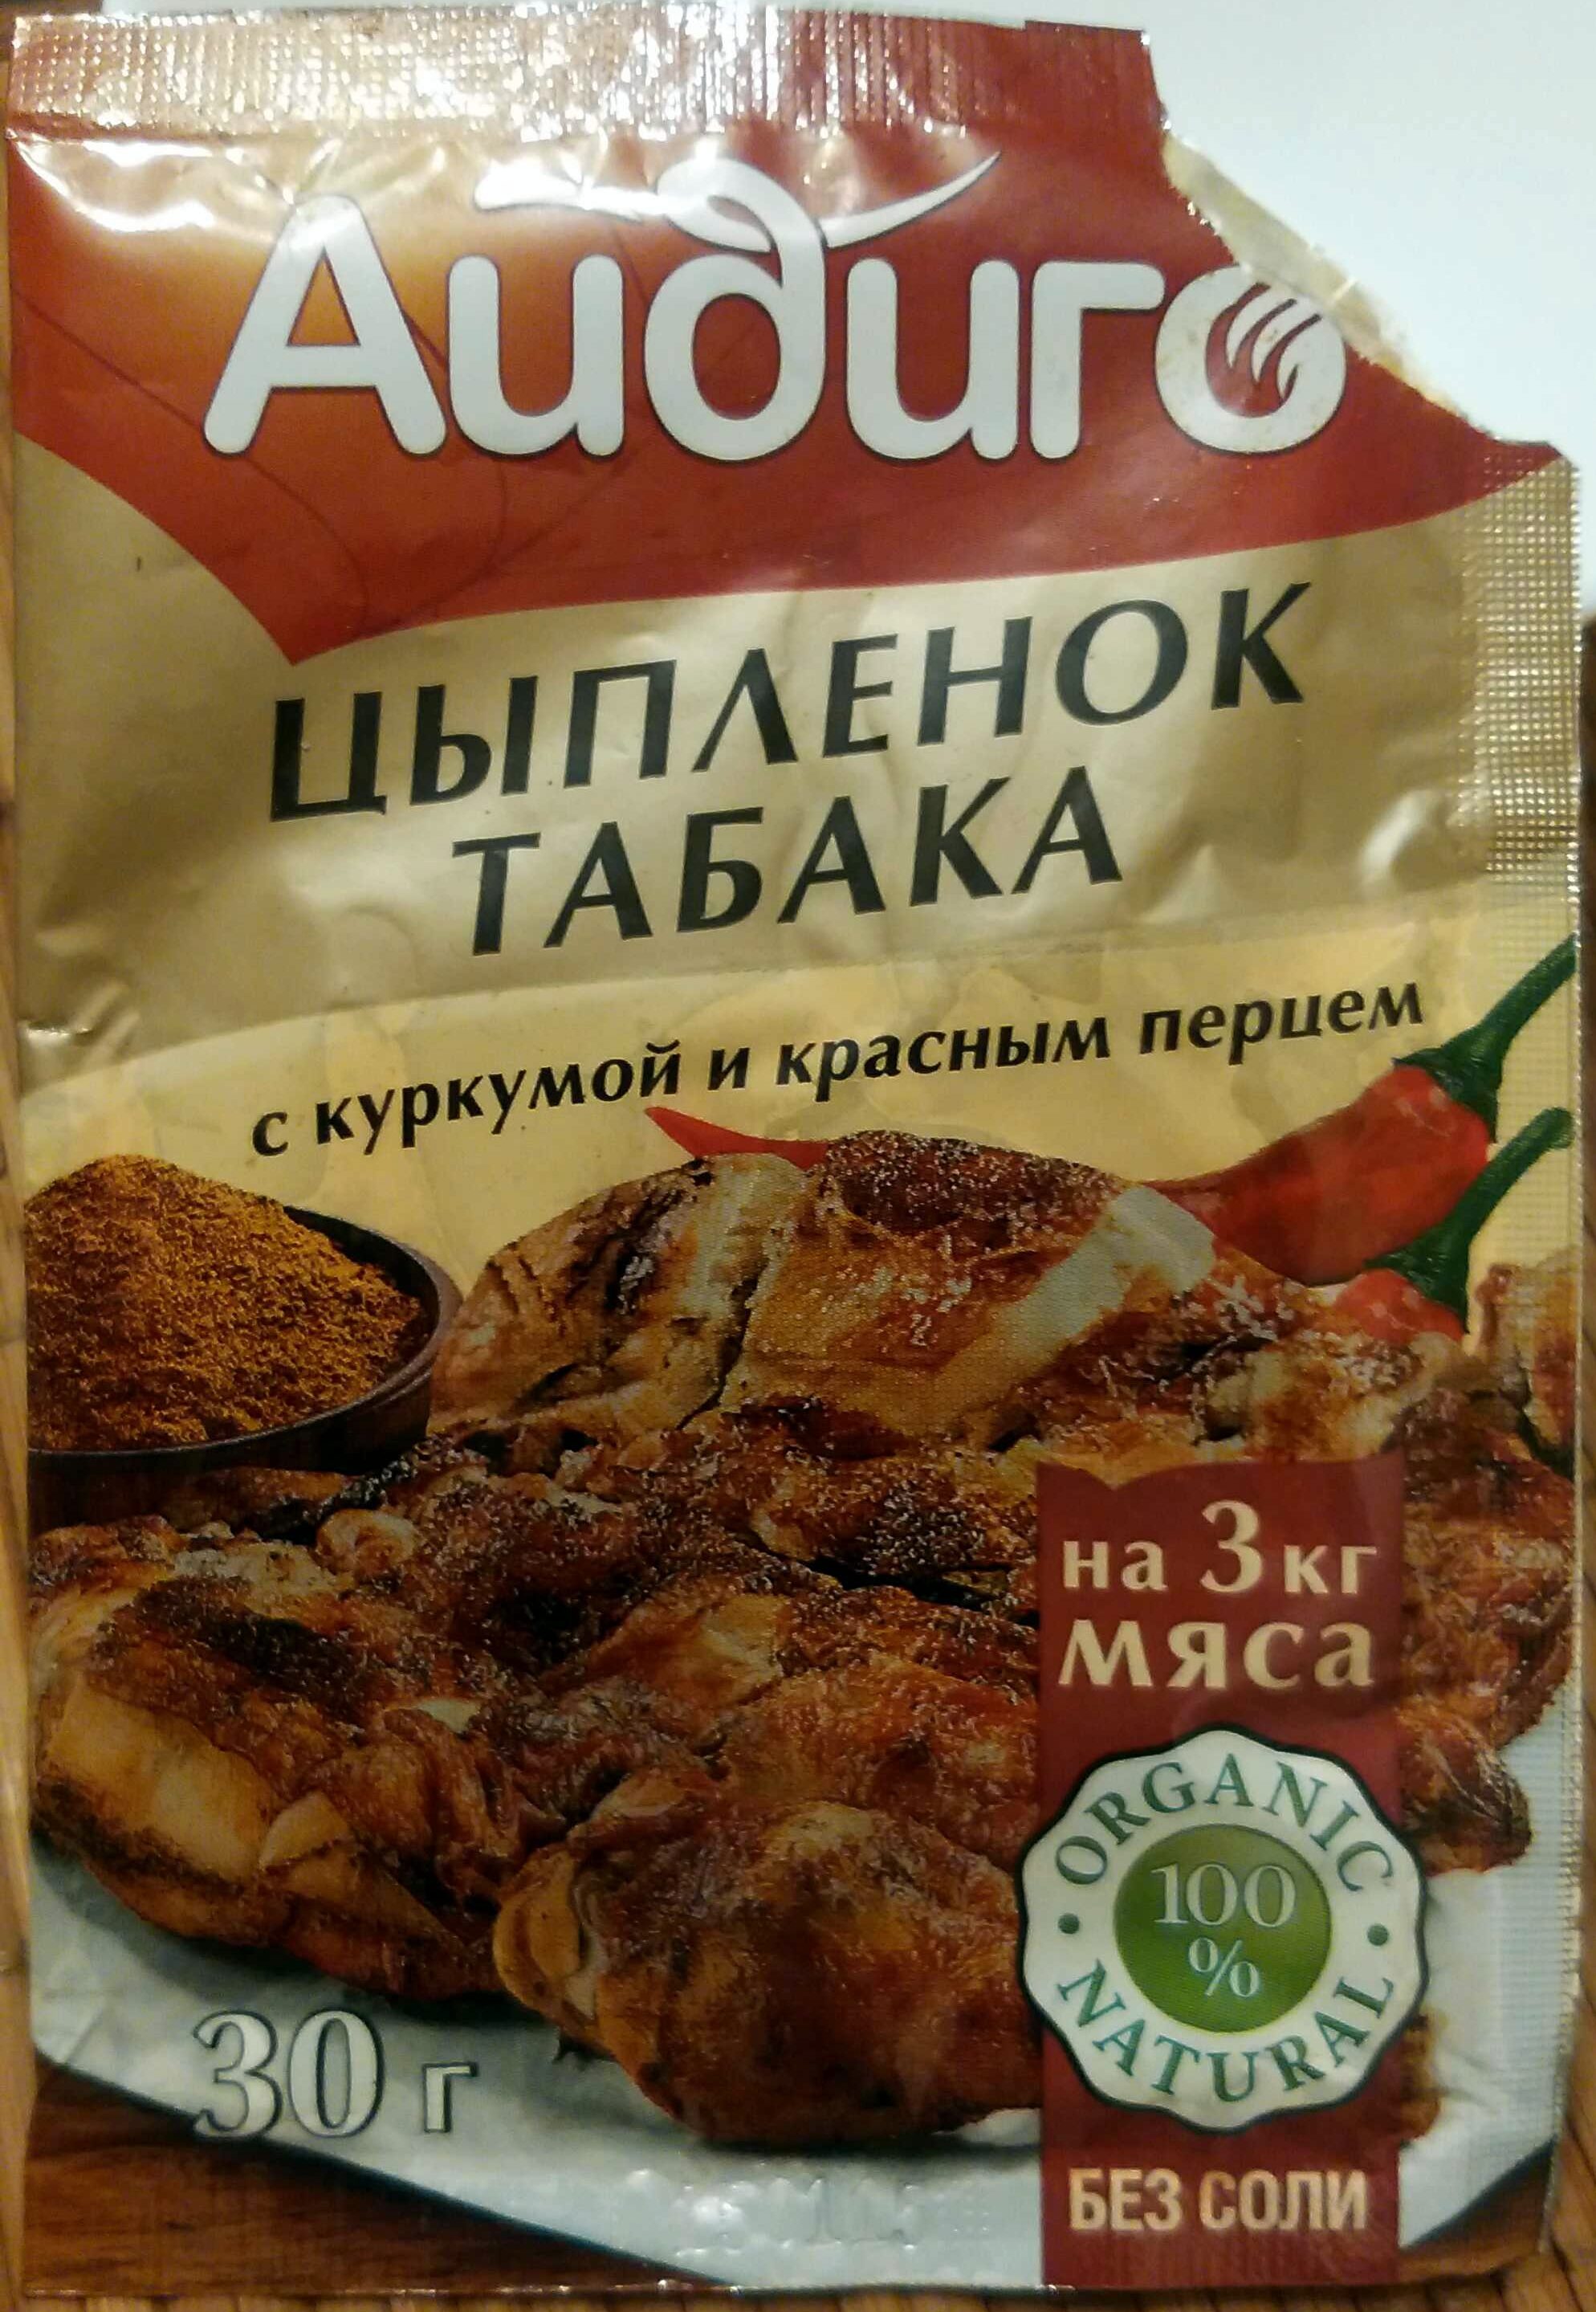 Цыплёнок табака с куркумой и красным перцем - Product - ru